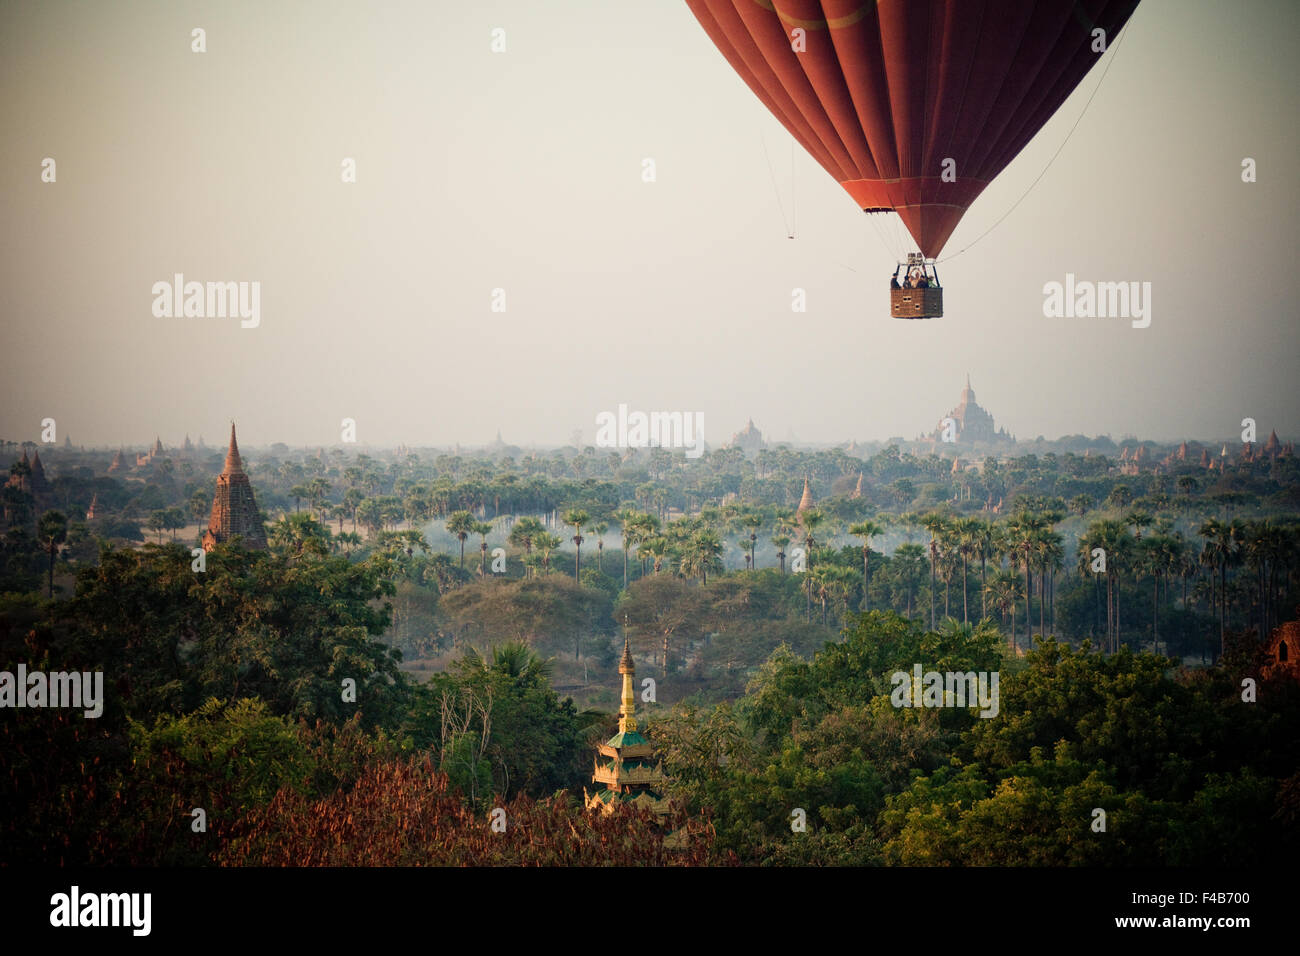 Balloons over Bagan ancient city Kingdom of Pagan temples and pagodas Burma (Myanmar) Stock Photo